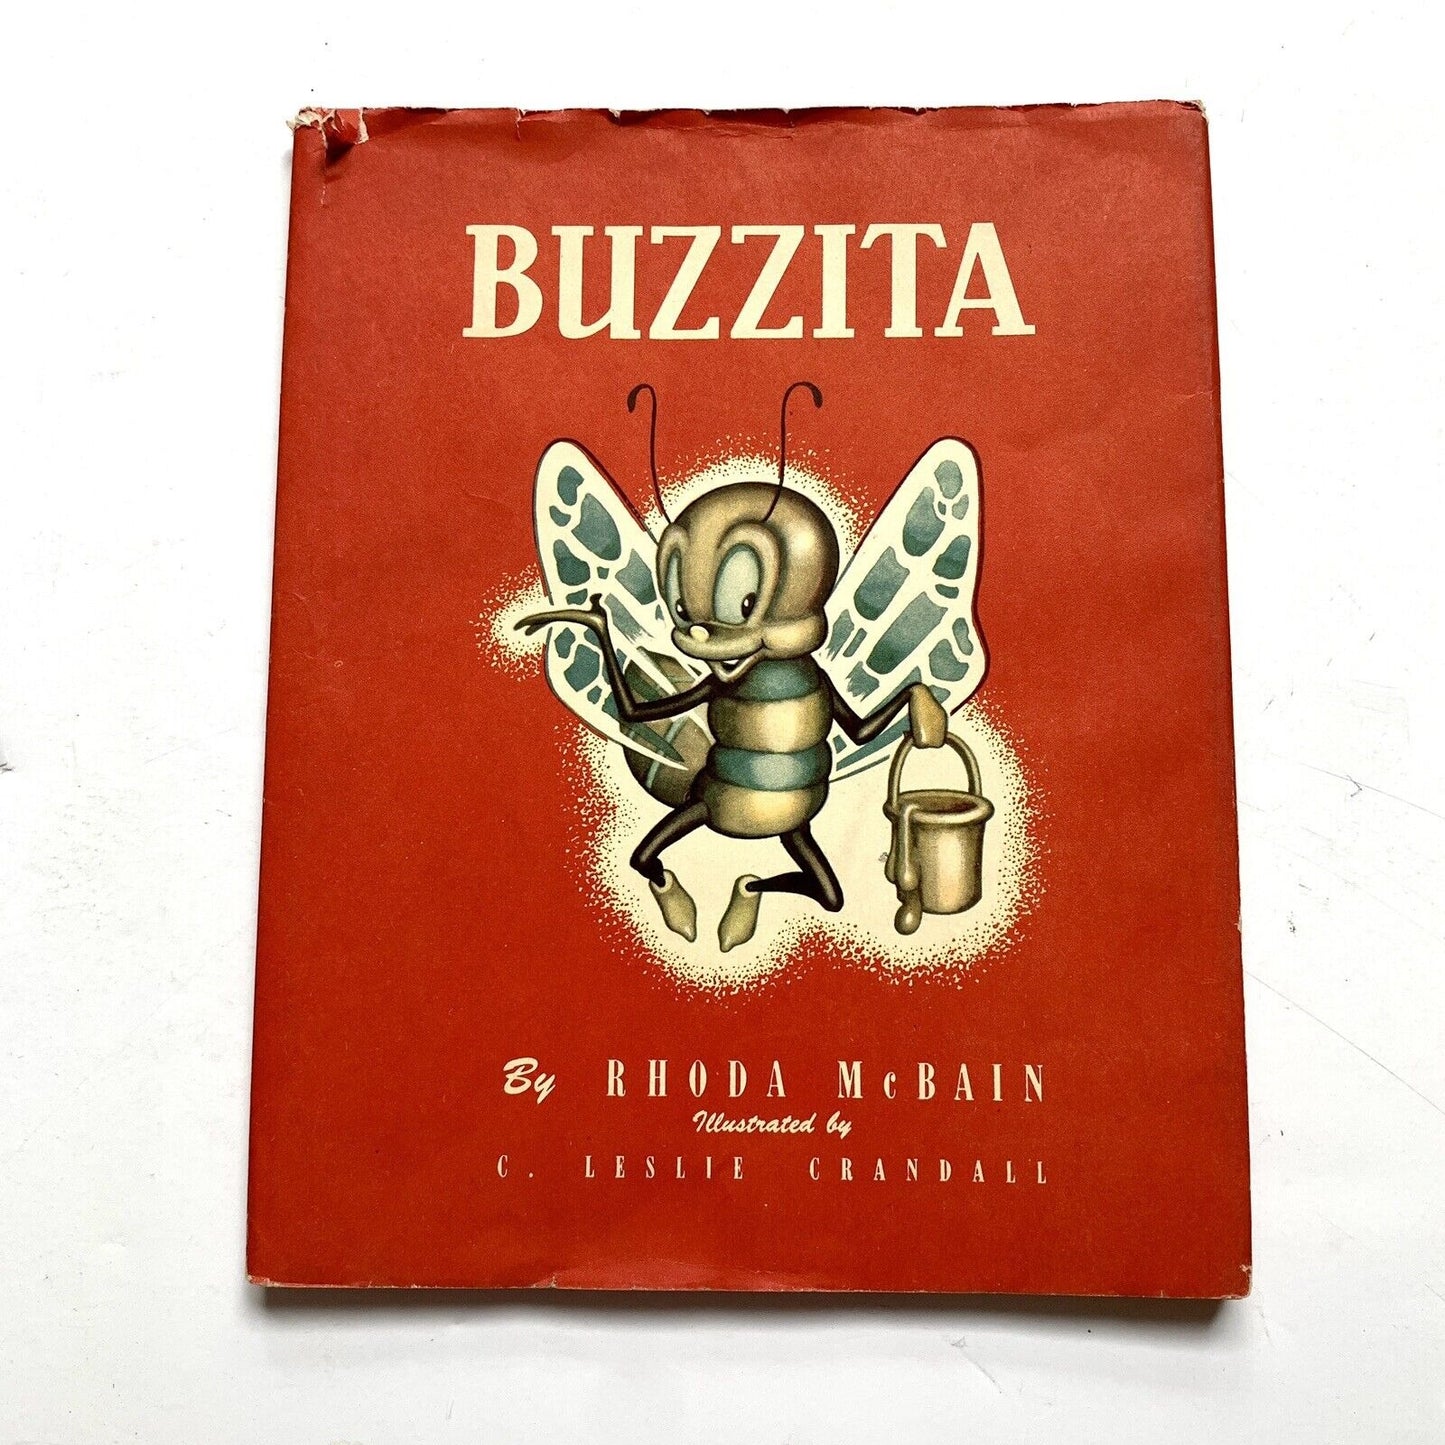 1948 Vintage 1st Edition Buzzita by Rhoda McBain Hardcover with DC